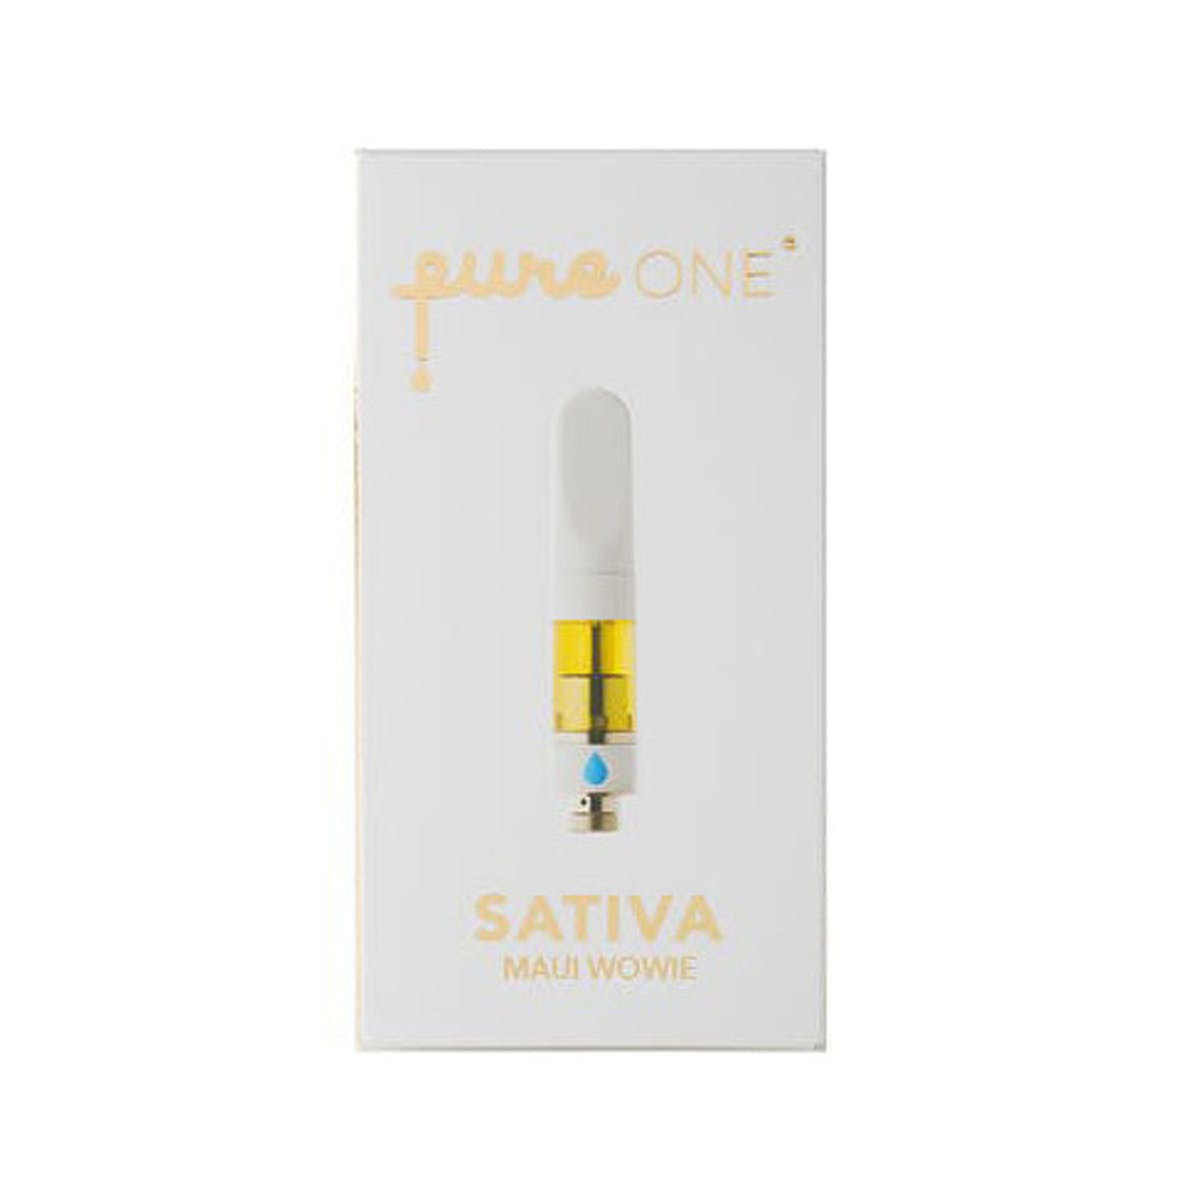 marijuana-dispensaries-sonoma-patient-group-in-santa-rosa-2c-ca-sativa-pureone-co2-cartridge-maui-wowie